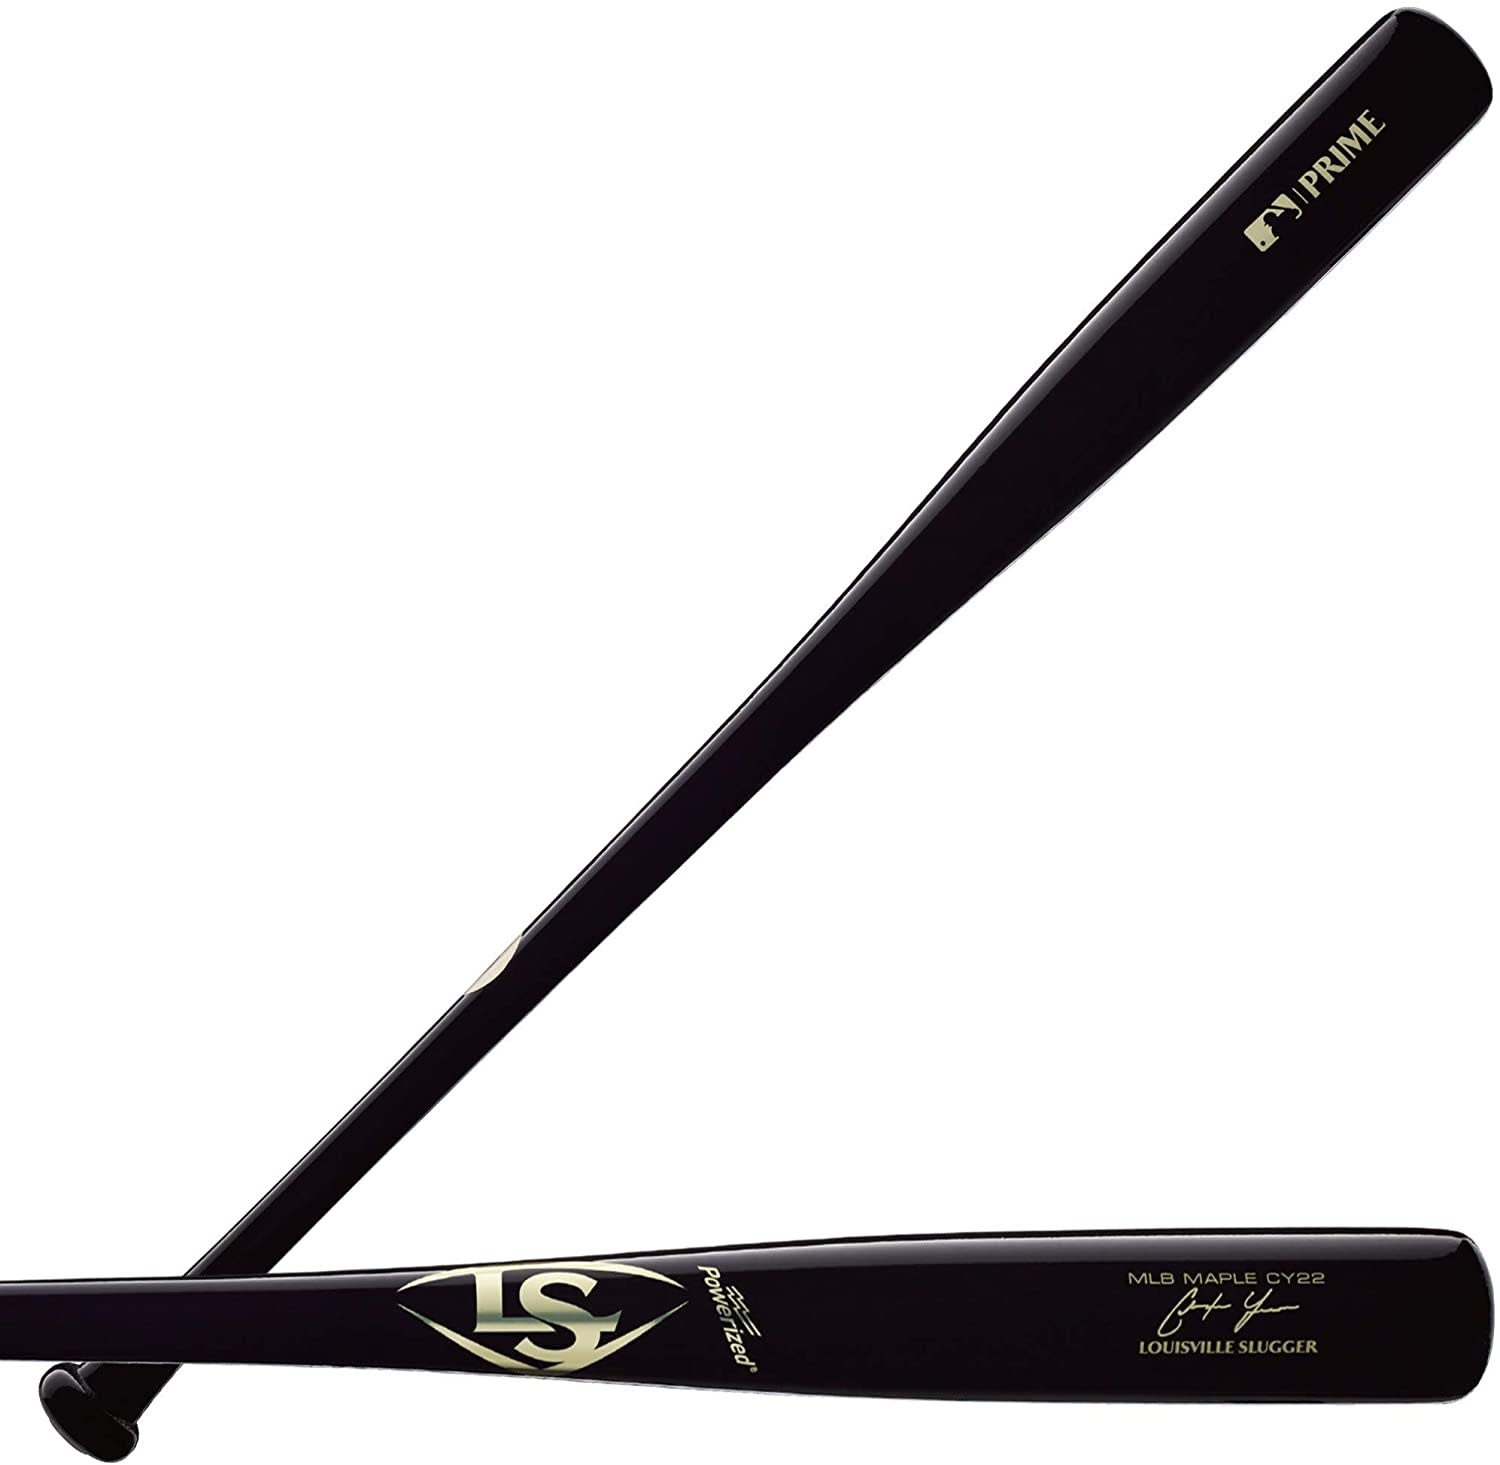 MLB PRIME signature CY22 Christian Yelich game model baseball bat